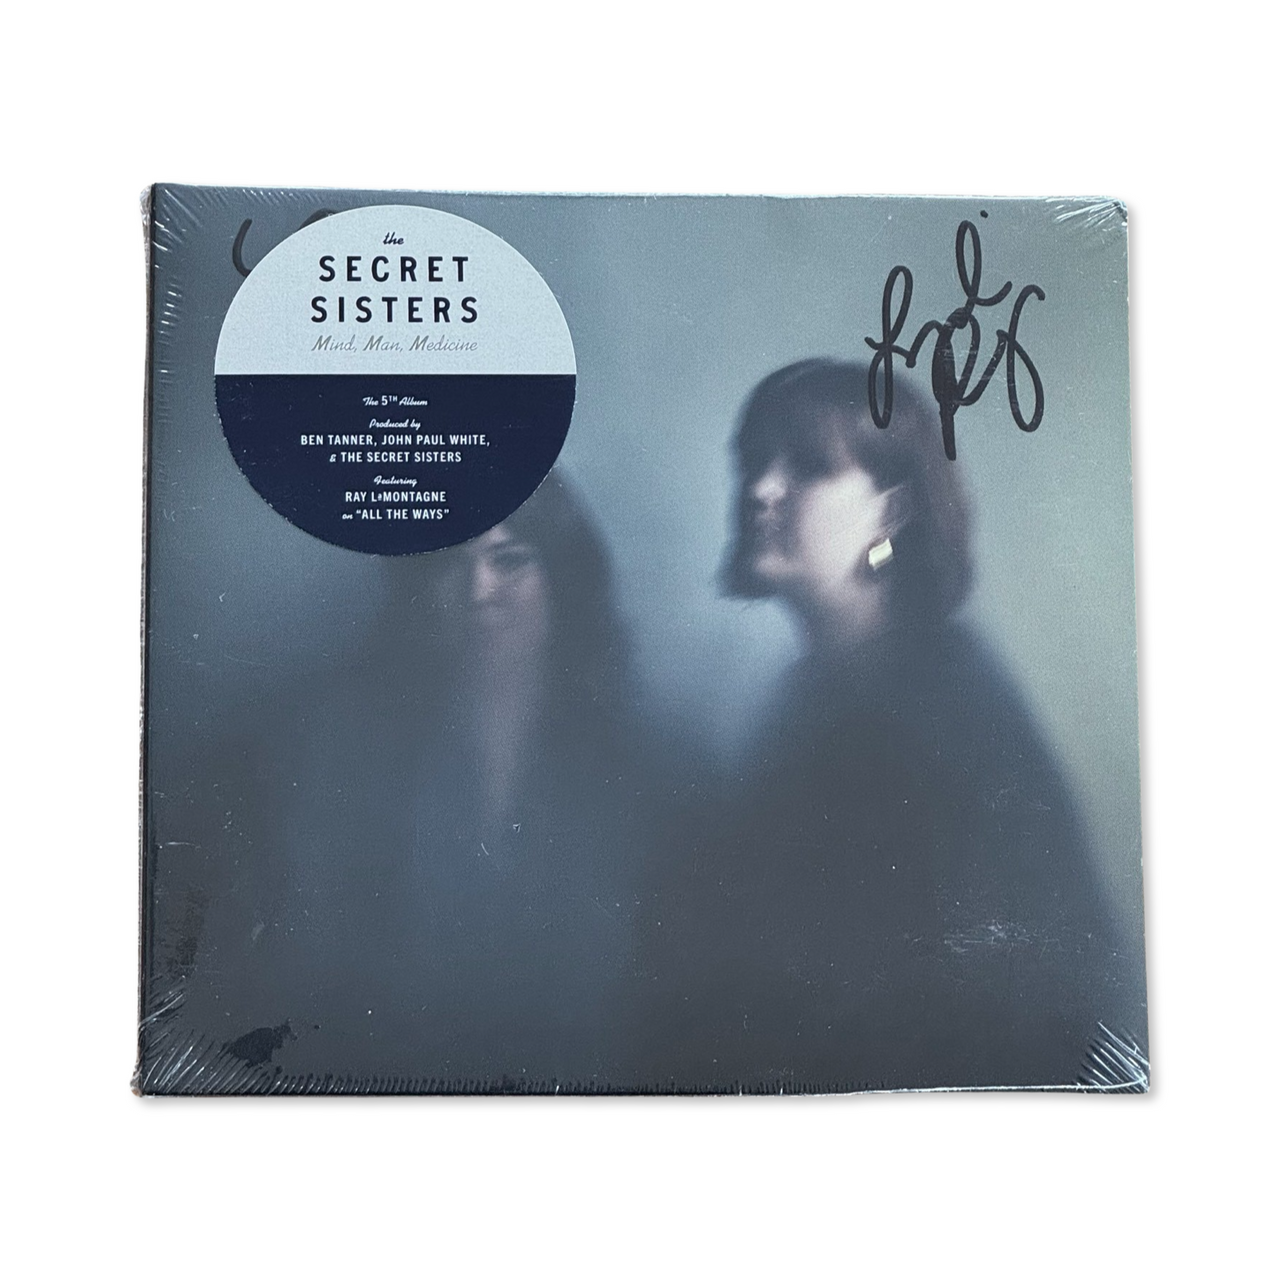 The Secret Sisters: Mind Man Medicine CD (autographed)